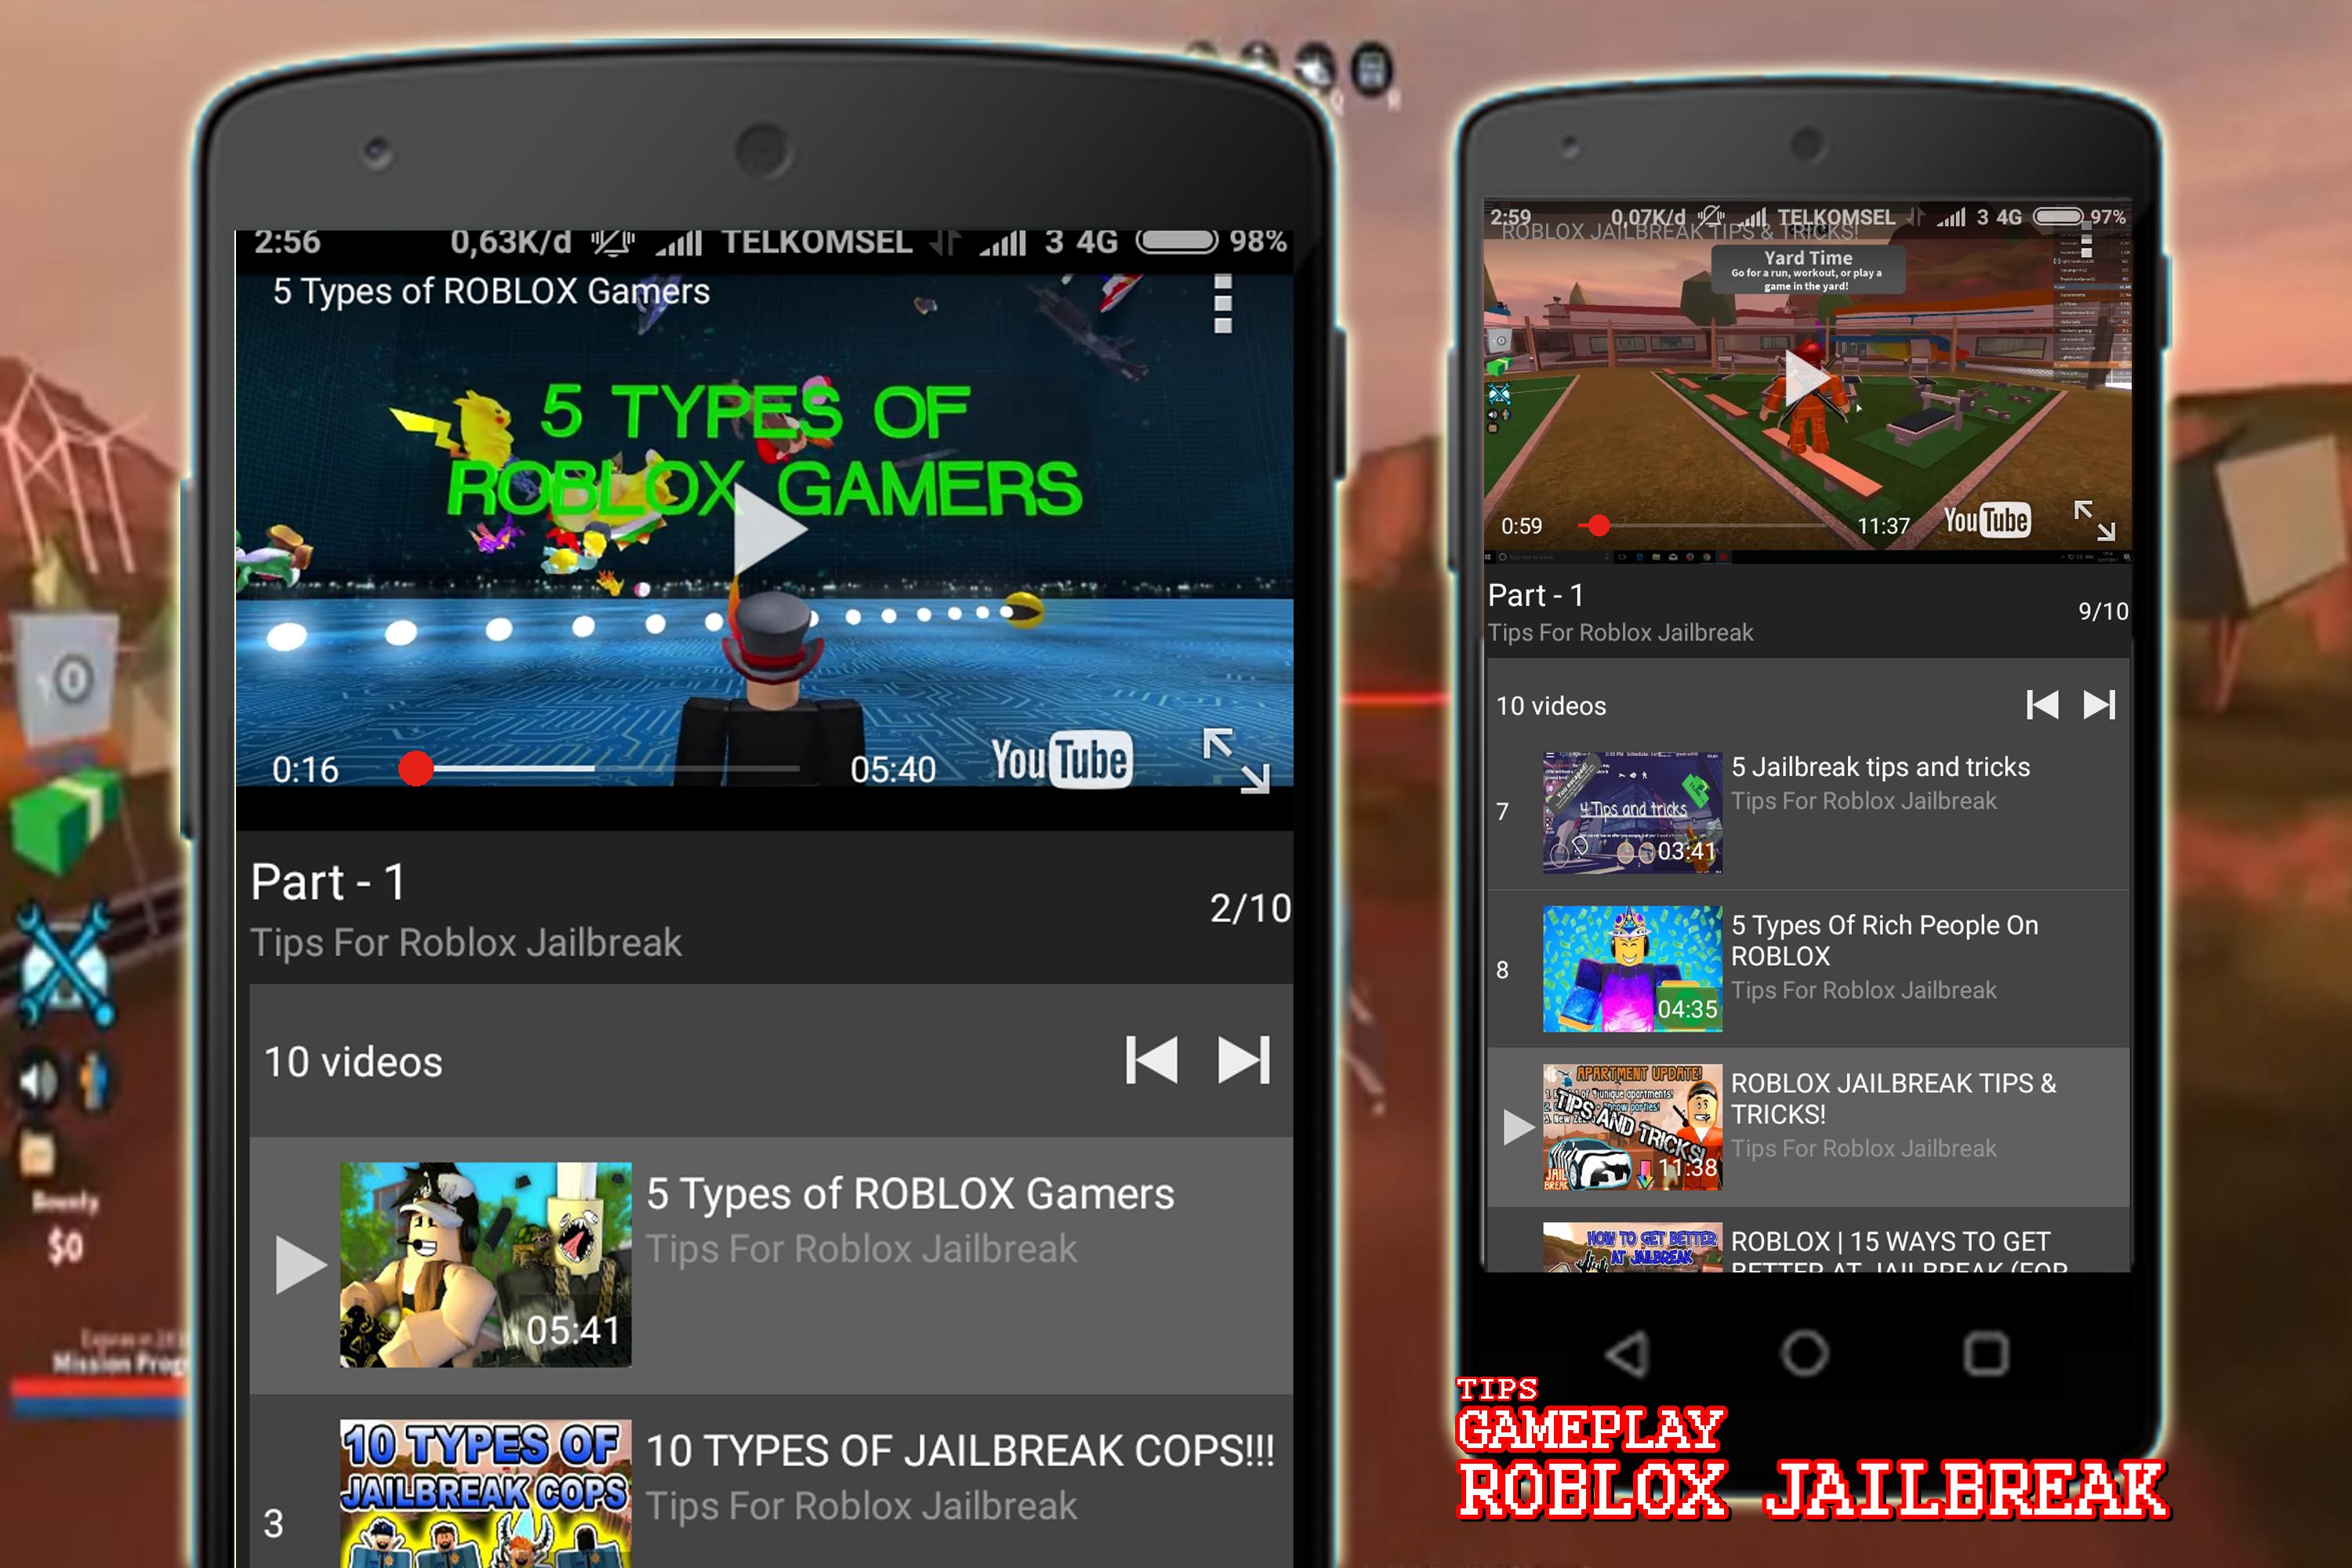 Tips For Roblox Jailbreak Guide Video For Android Apk Download - roblox android jailbreak